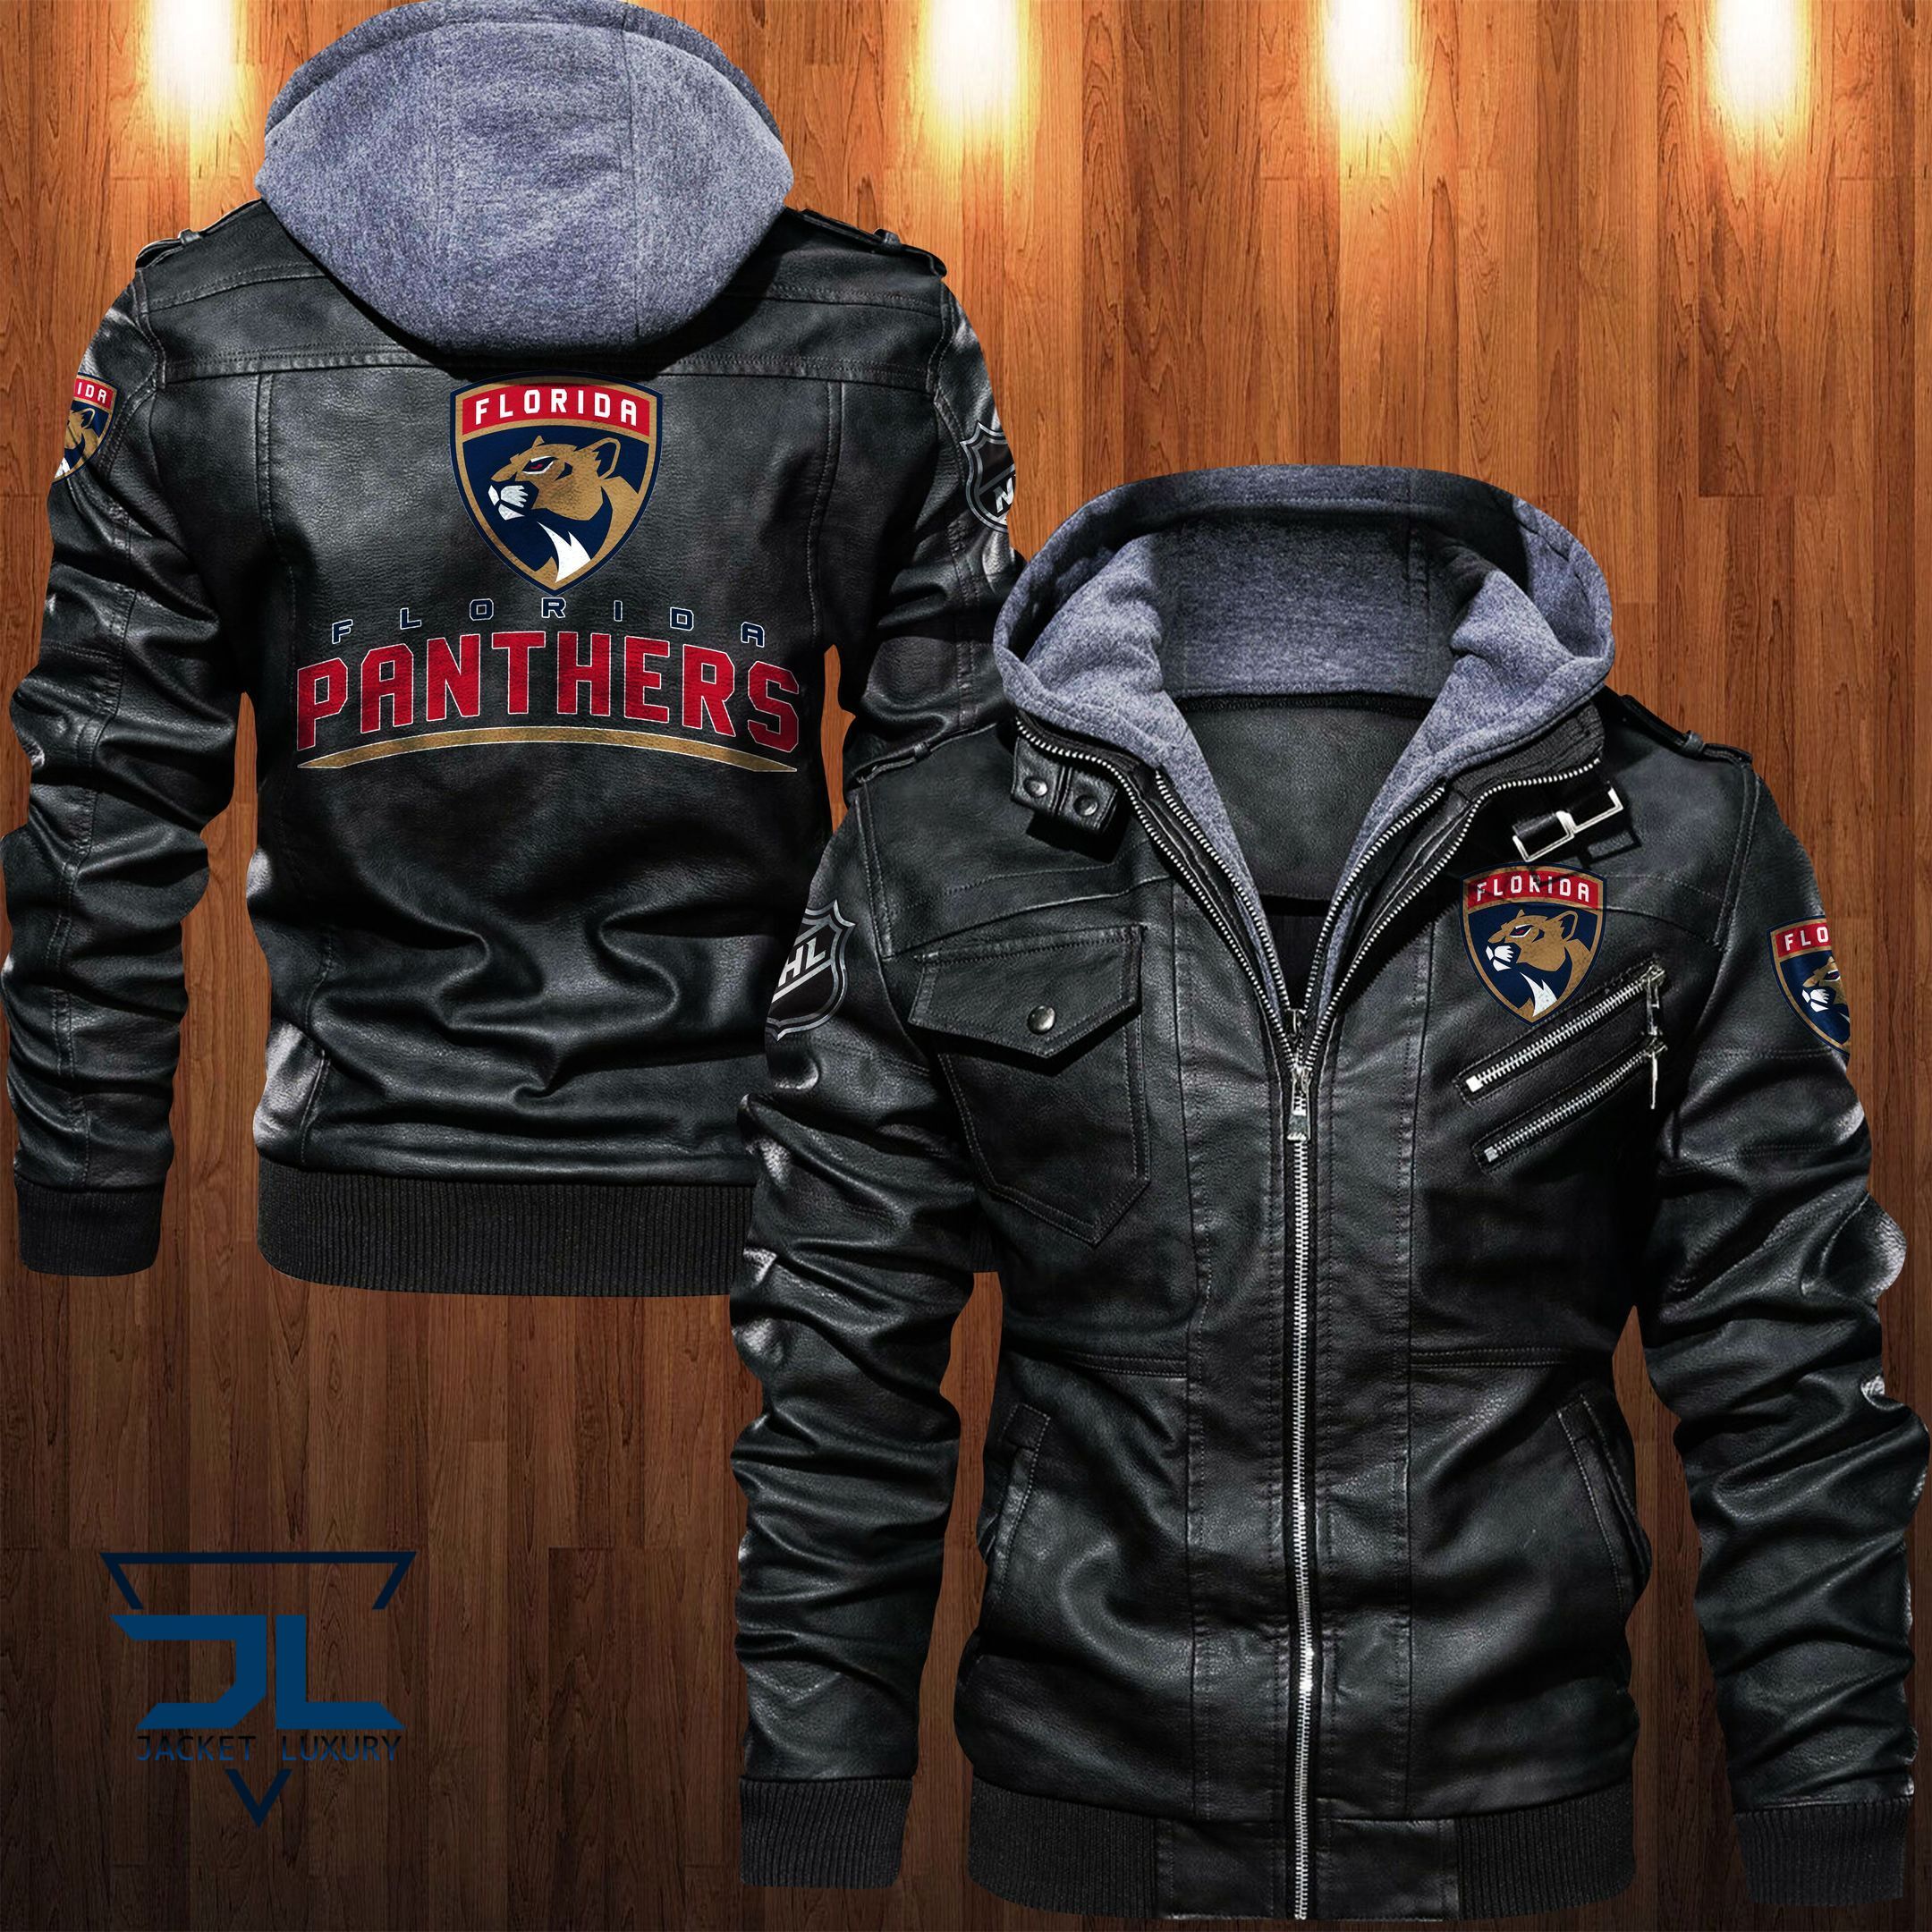 What Leather jacket Sells Best on Techcomshop? 199